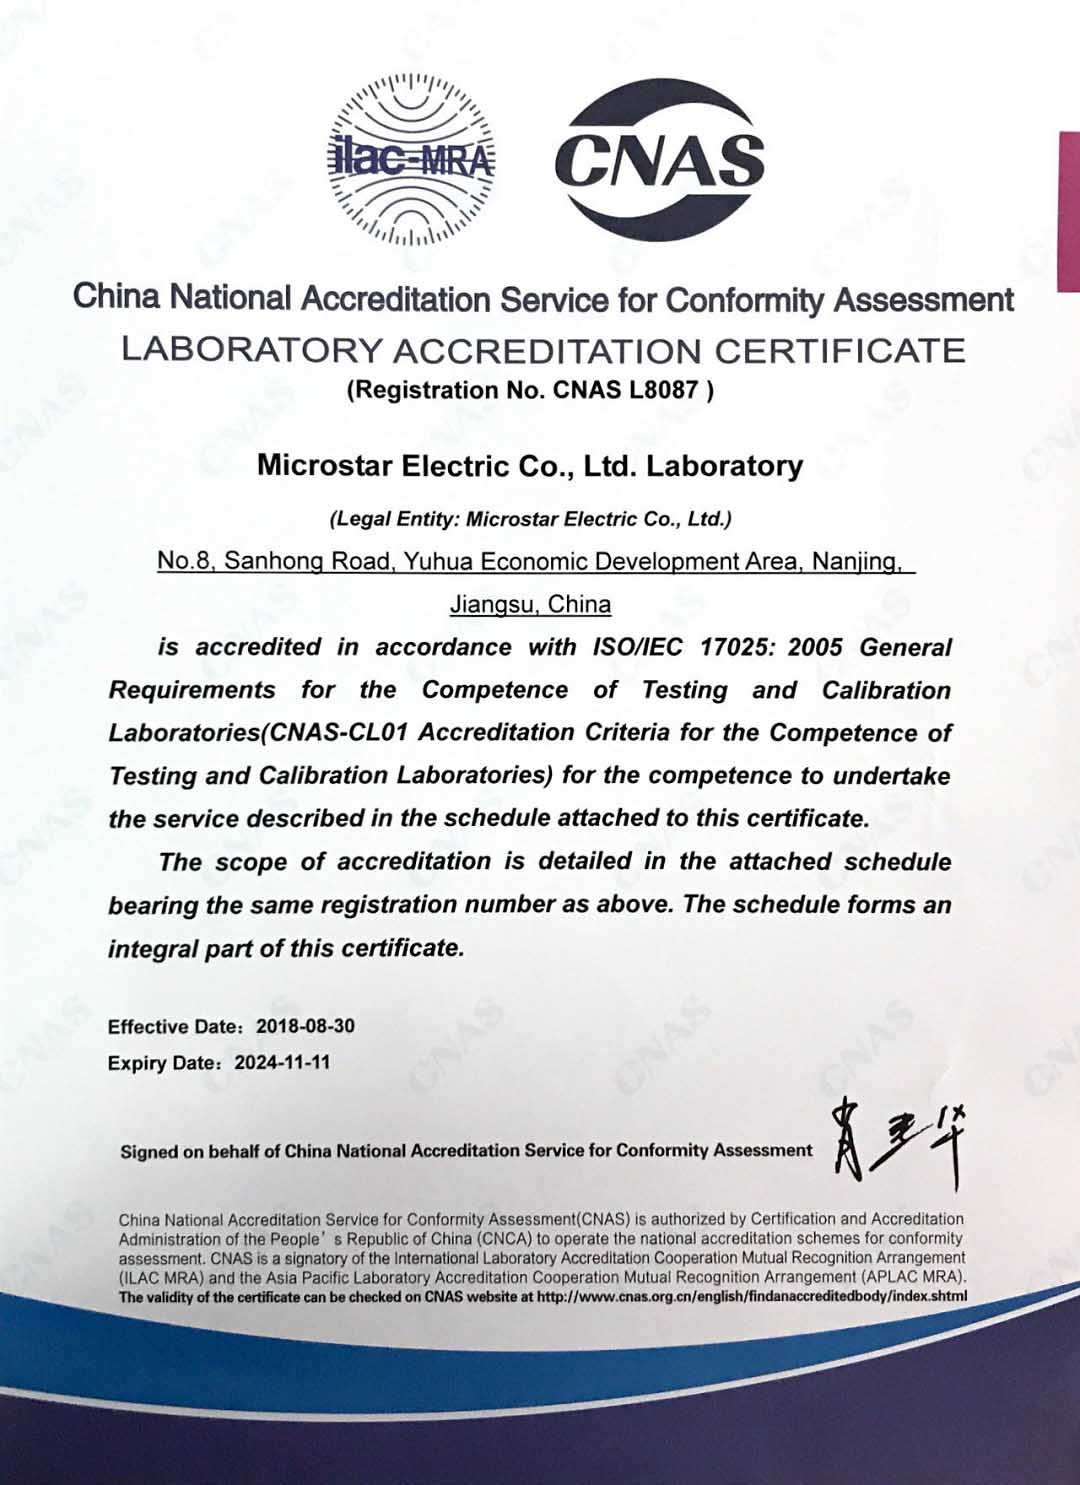 Microstar IEC17025 Laboratory Accreditation (CNAS) Certificate